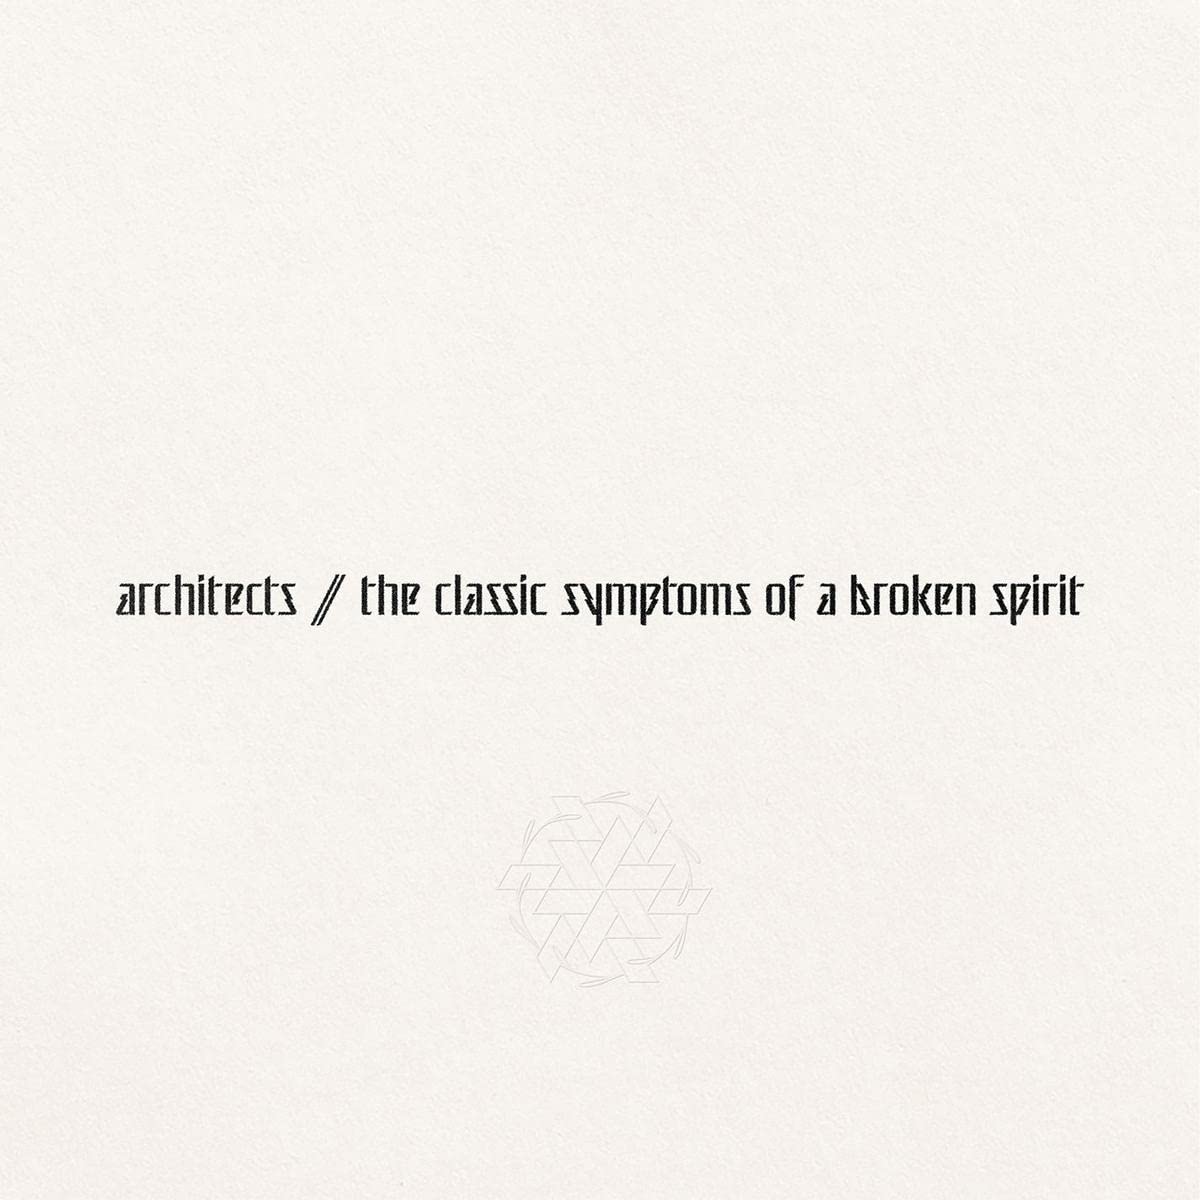 architects-the-classic-symptoms-of-a-broken-spirit-kompromisslos-album-review